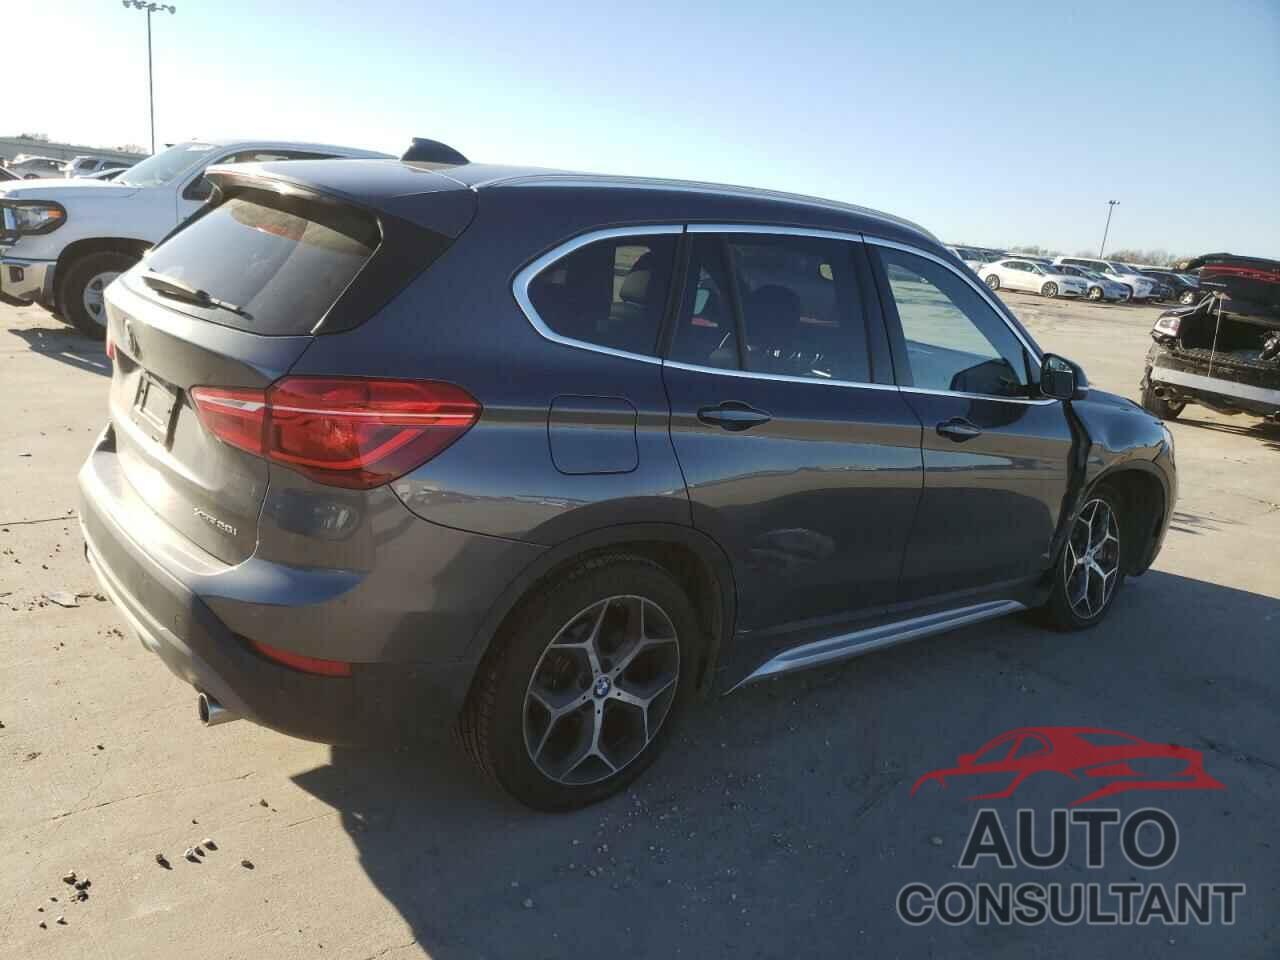 BMW X1 2018 - WBXHT3C31J5L28830